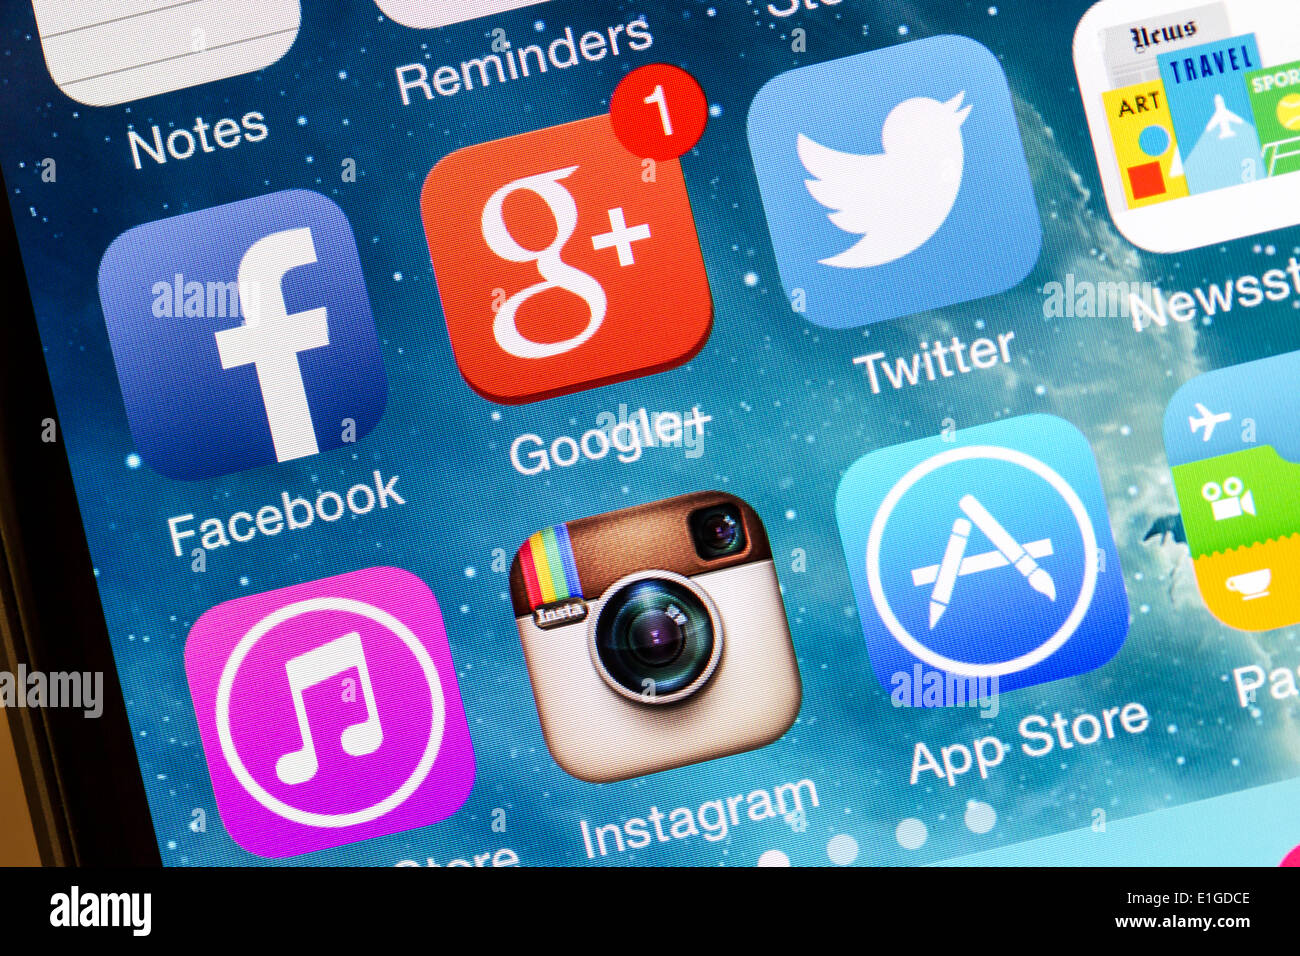 Popular social media icons om iphone screen Stock Photo